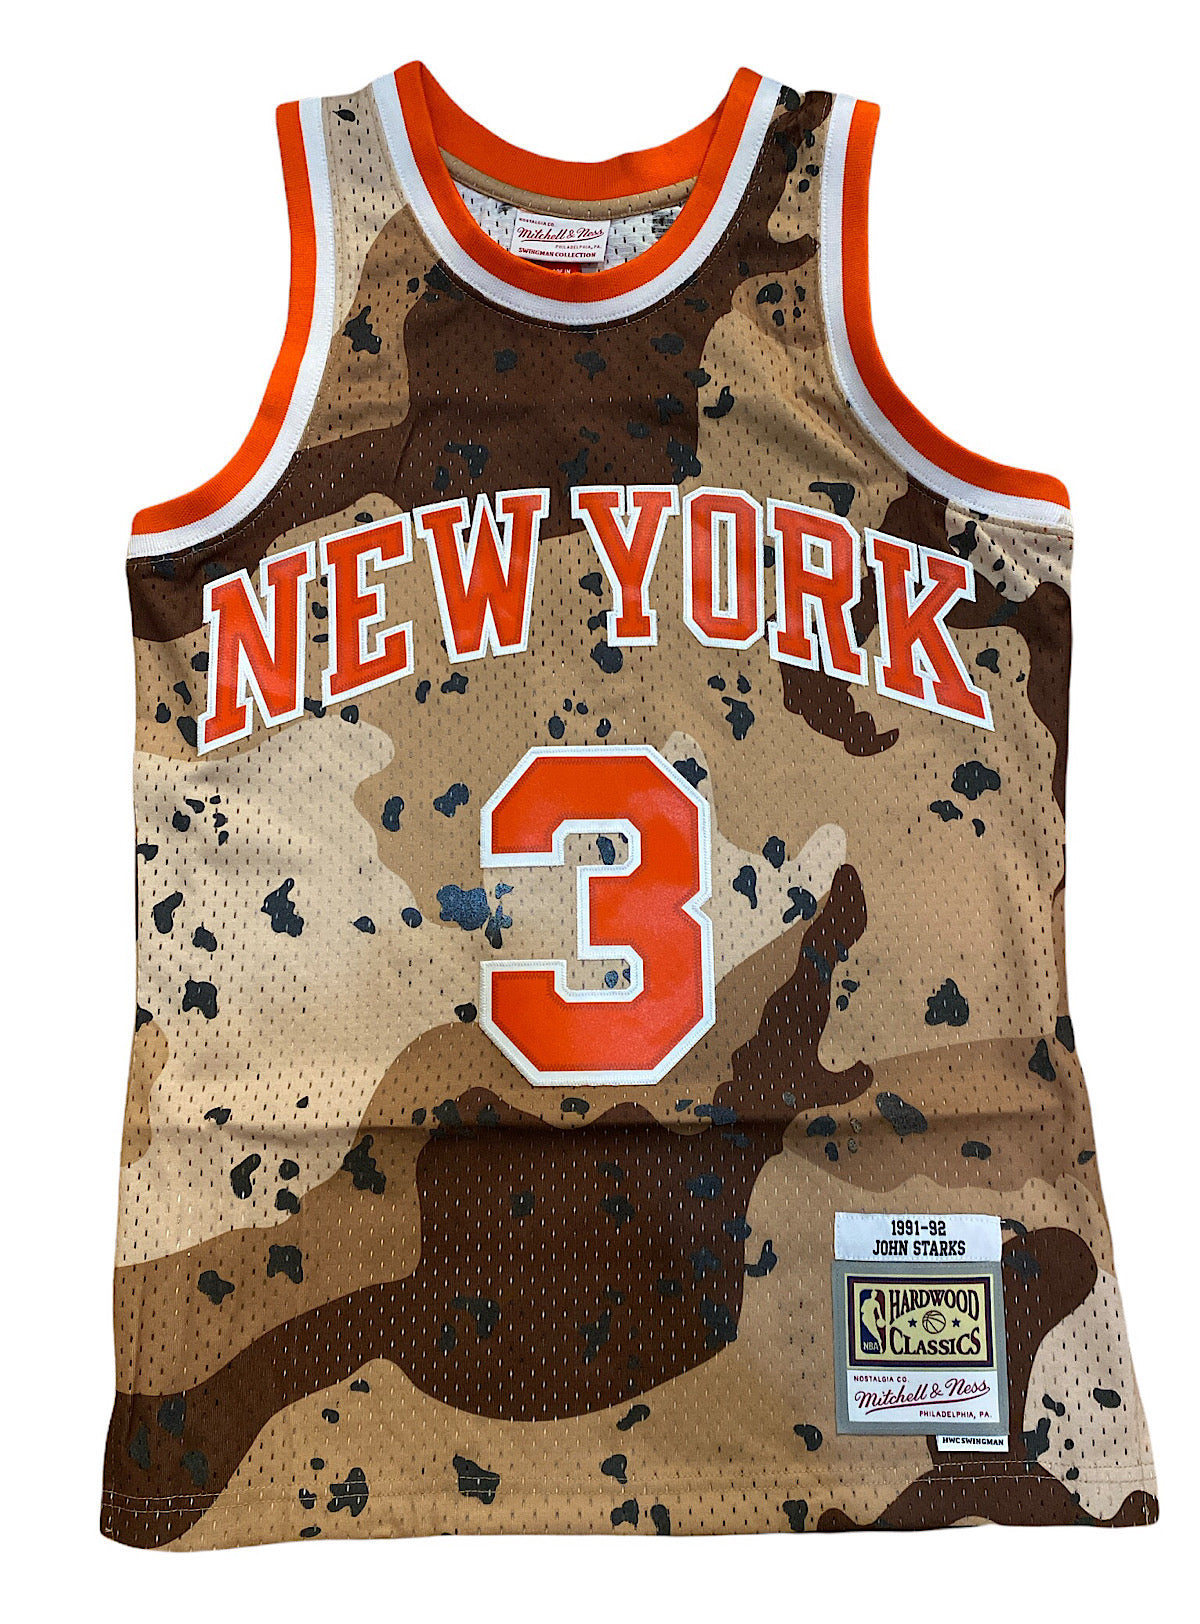 Mitchell & Ness Youth Boys Orange and Royal New York Knicks 1991